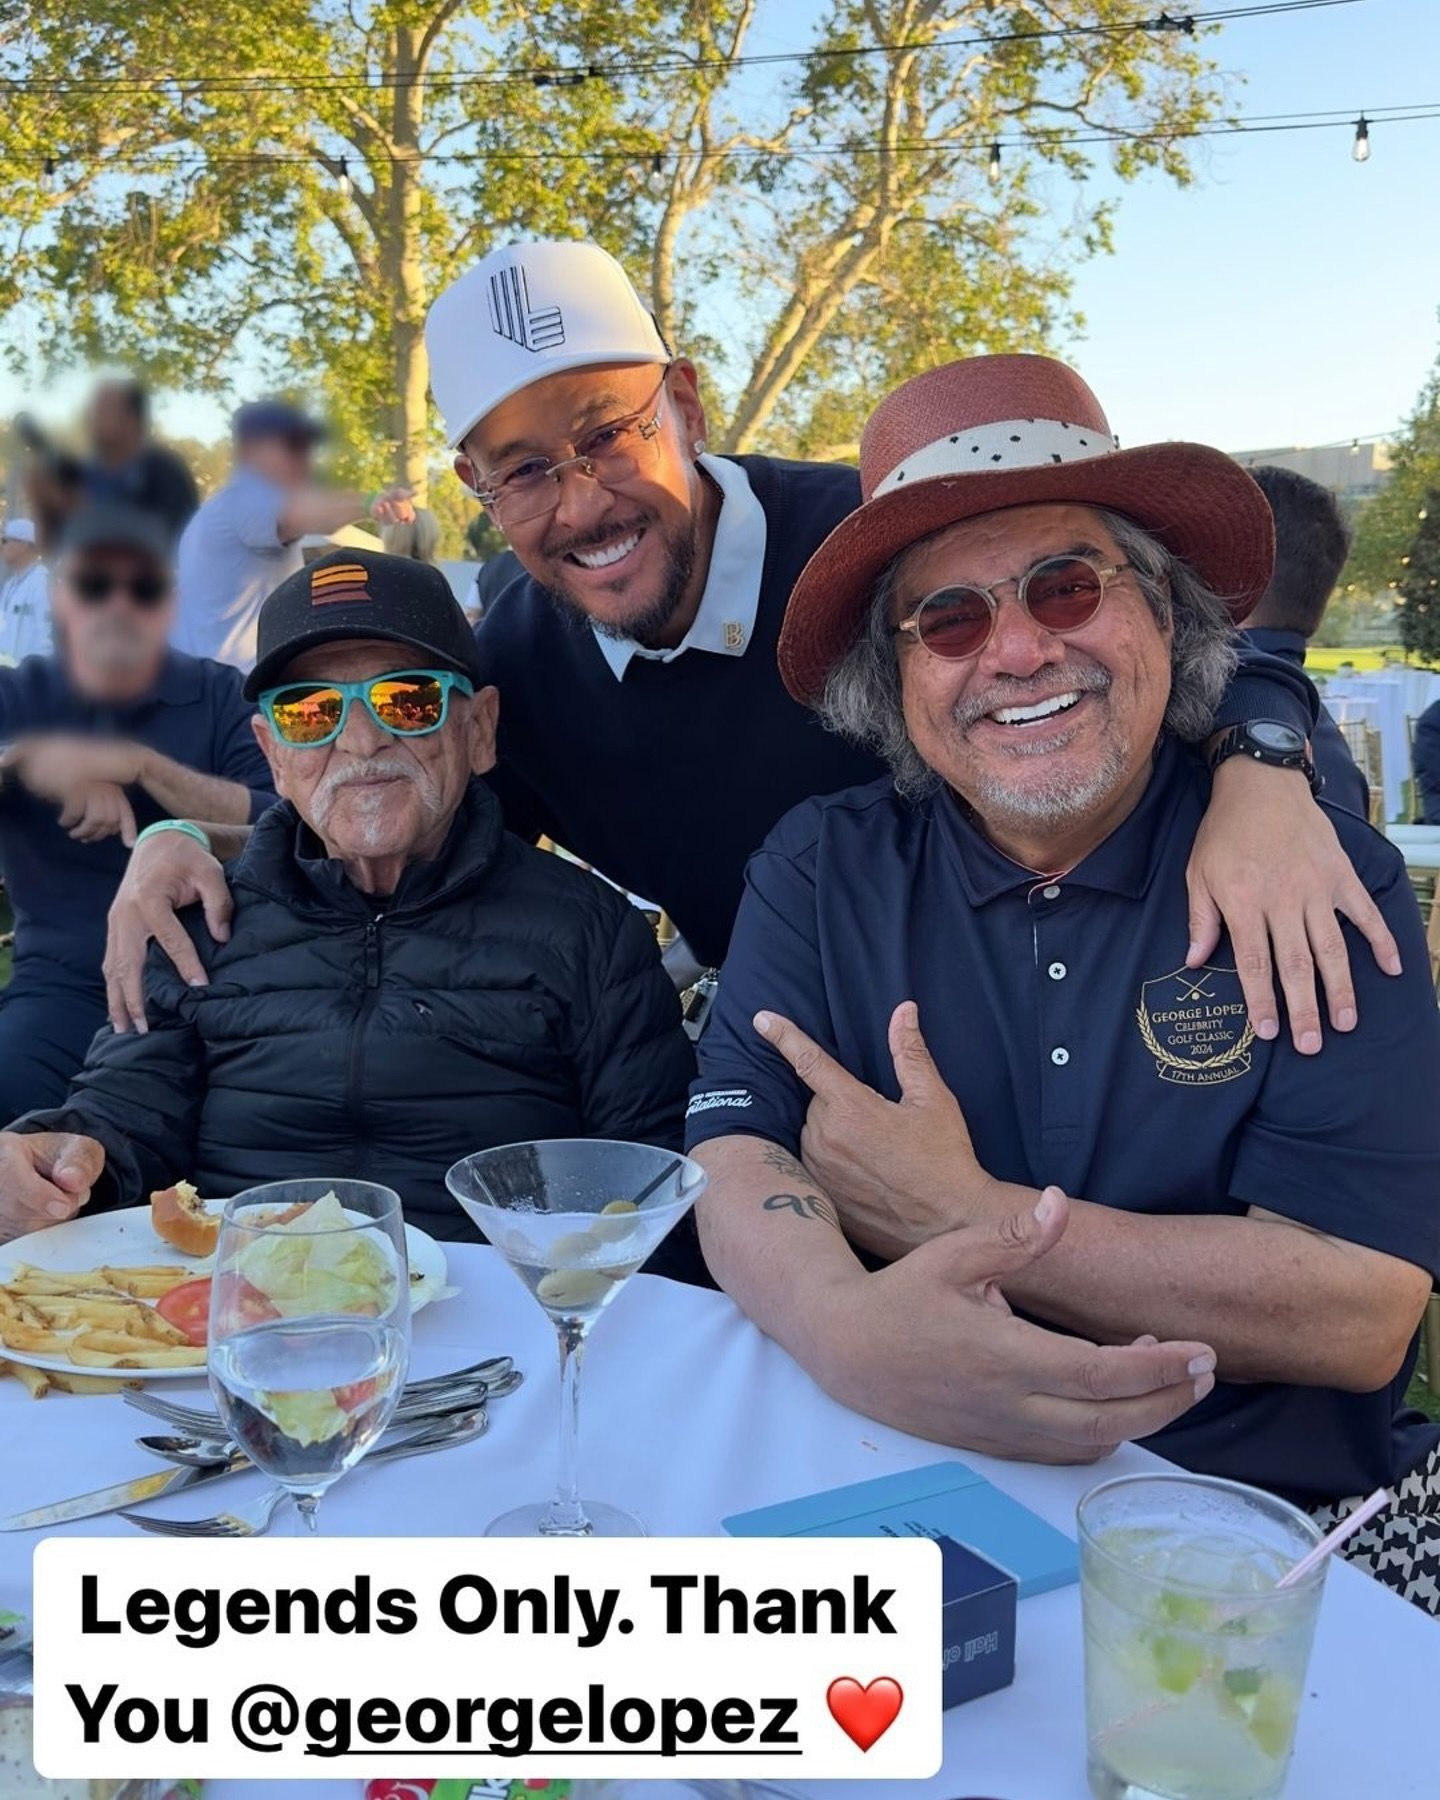 LEGENDS 👌 Joe Pesci and George Lopez with Ben Baller at the 17th Annual George Lopez Celebrity Golf Classic.

#GiveBack&nbsp;#JoePesci #GeorgeLopez #BenBaller #GeorgeLopezCharityFDN #ForeKidneyHealth #raiseawareness #kidneydisease #organdonation #ce